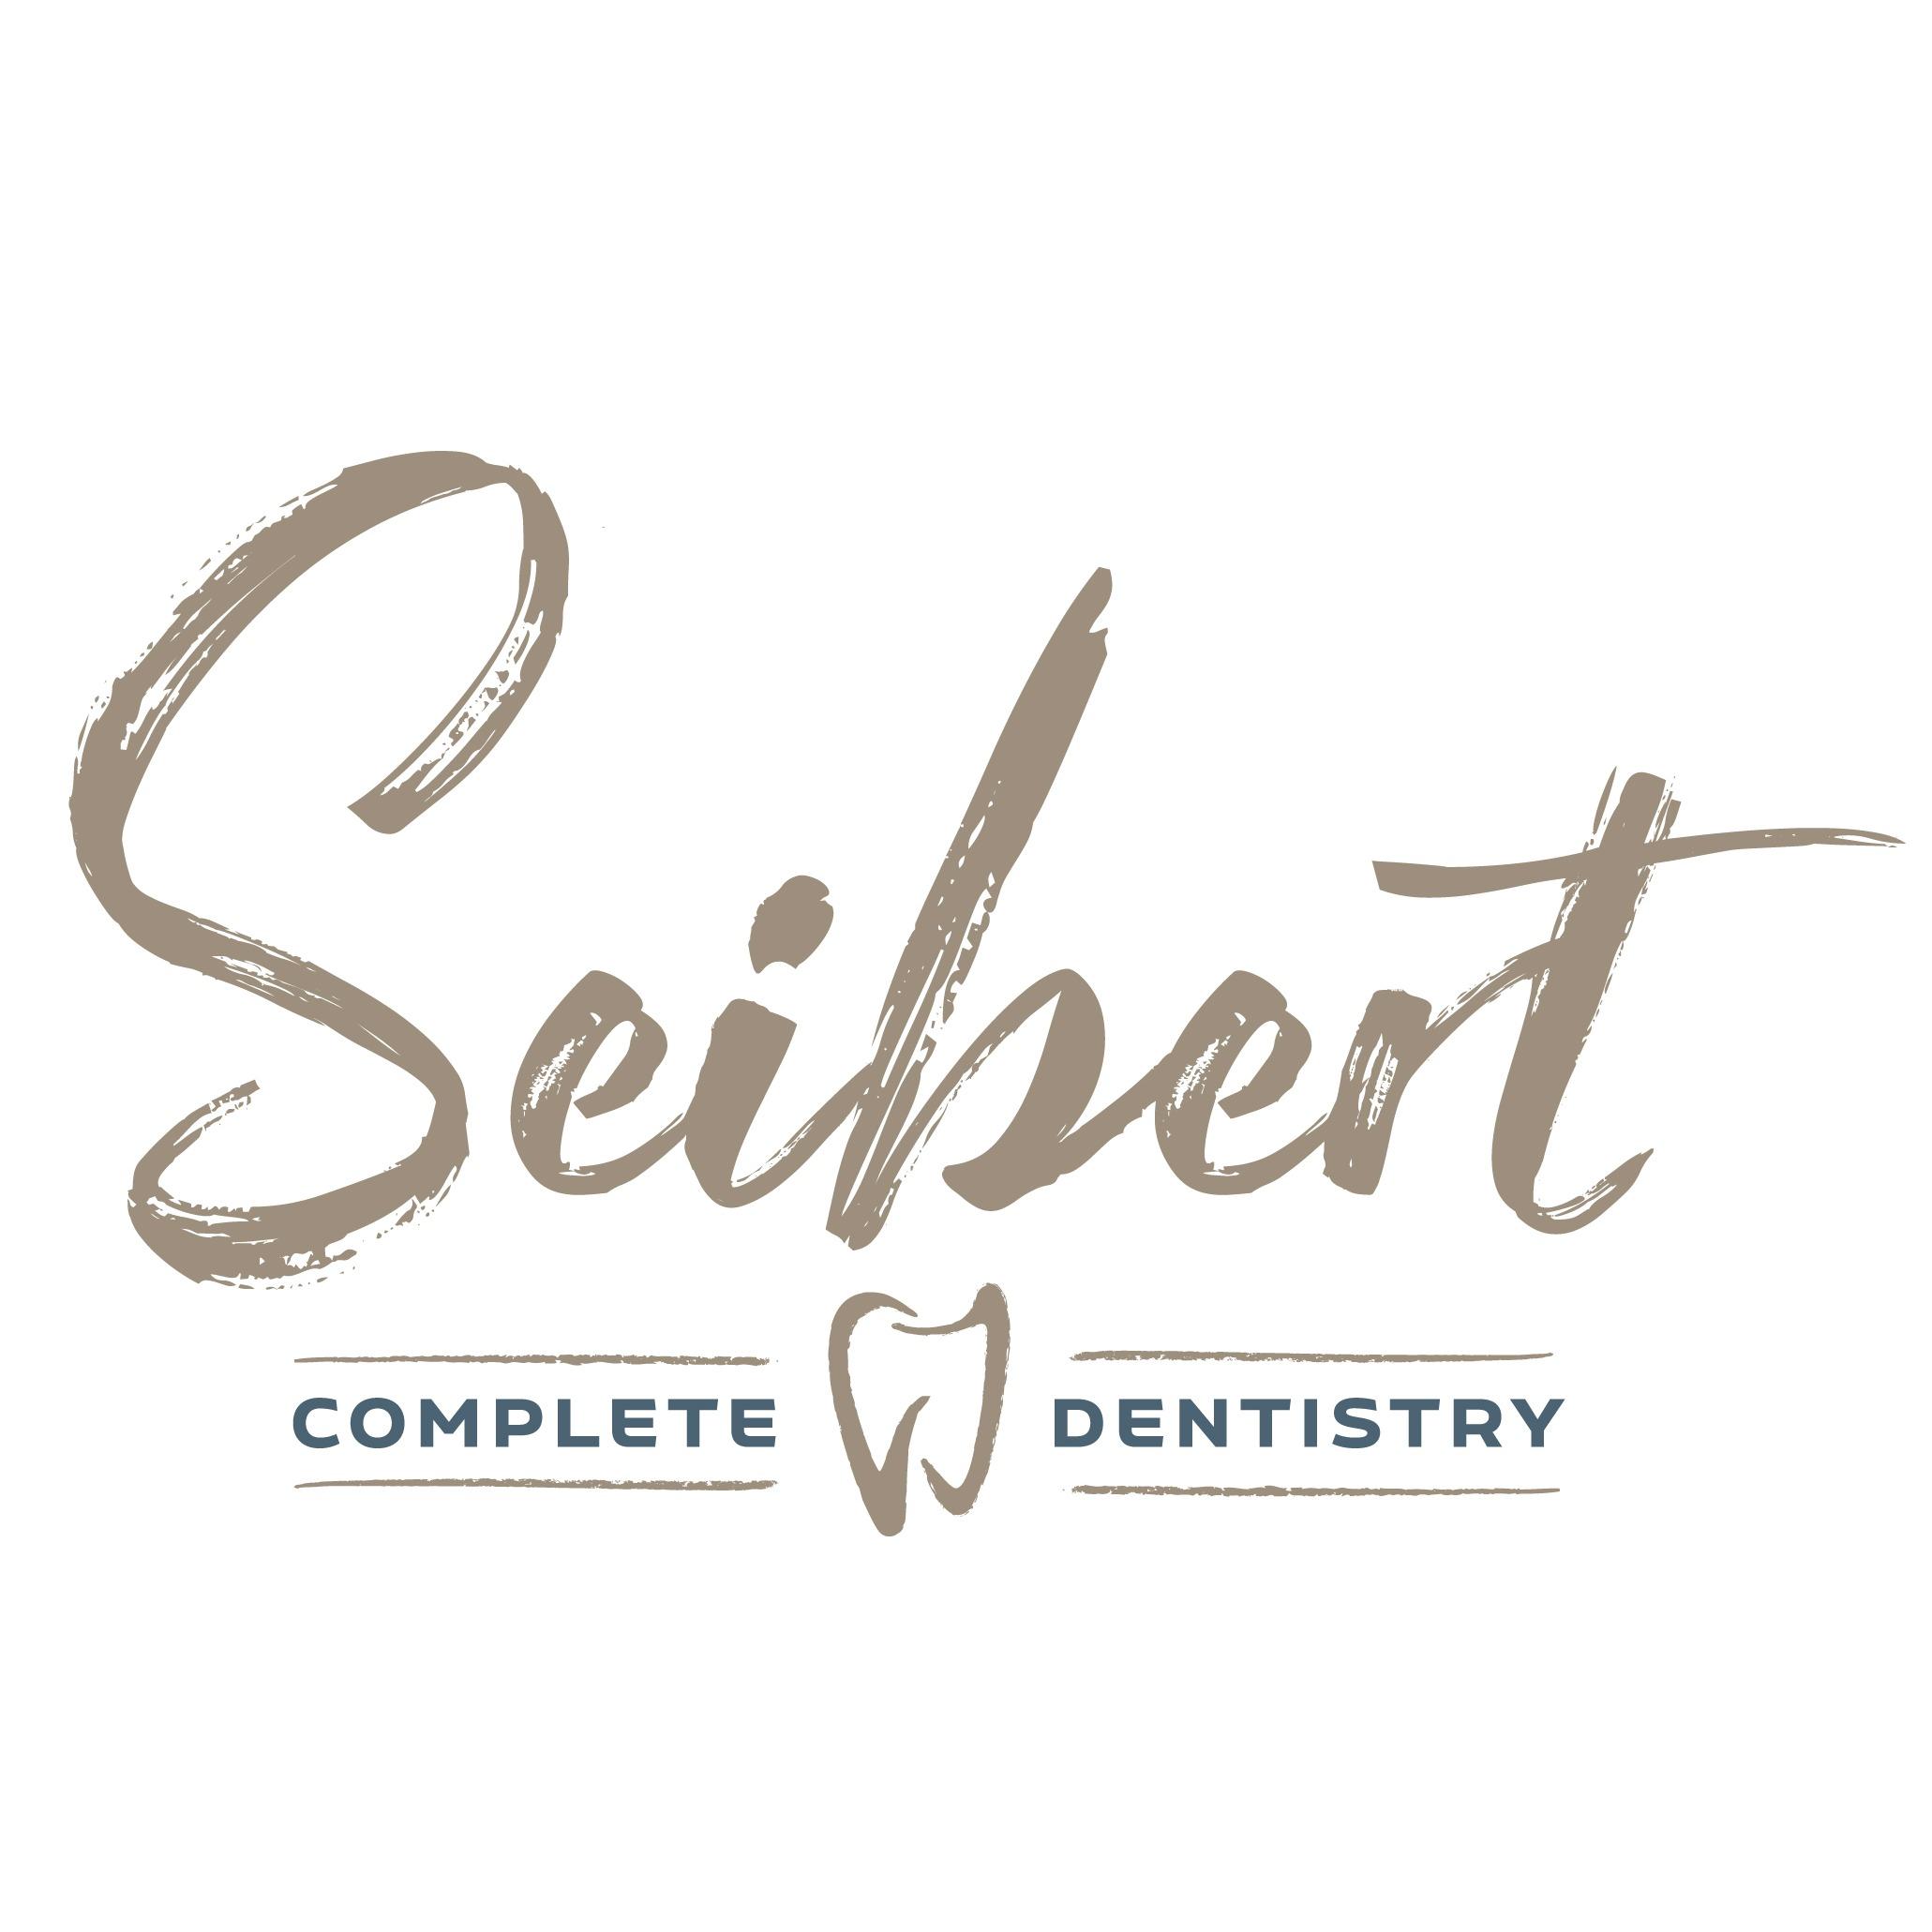 Seibert Complete Dentistry - Cincinnati, OH 45230 - (513)231-9300 | ShowMeLocal.com